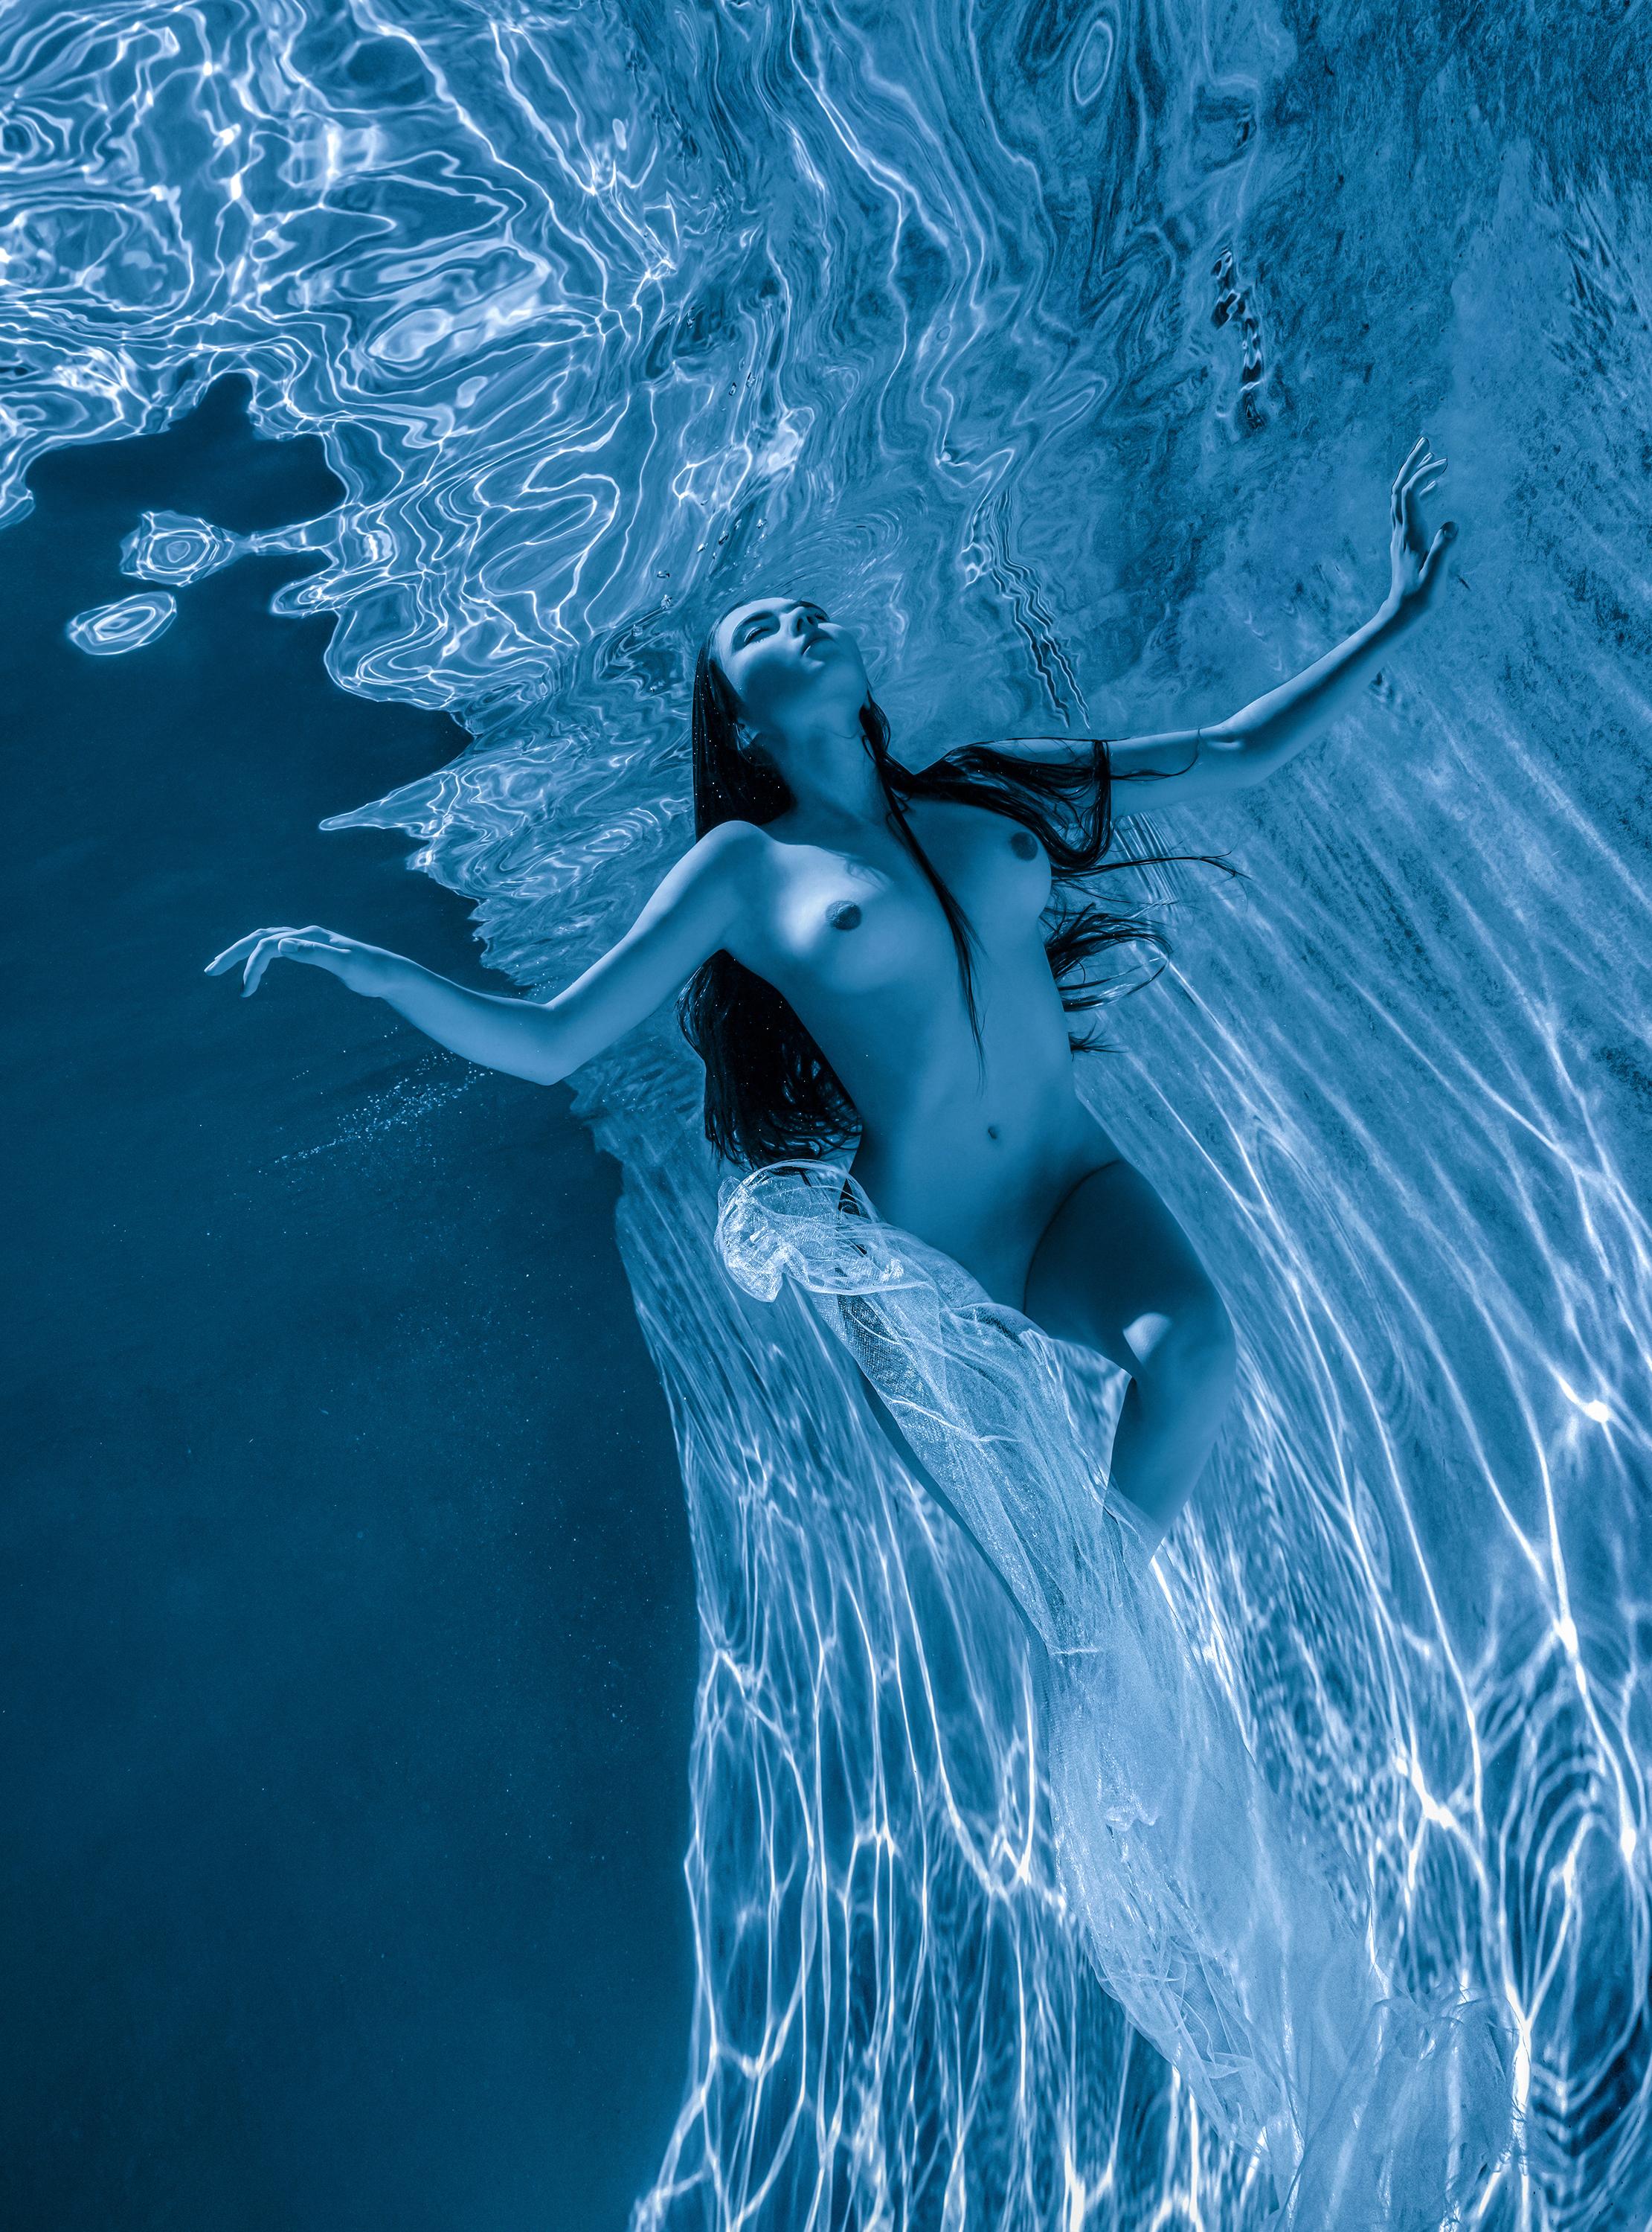 Alex Sher Nude Photograph - Freediver - underwater nude photograph - archival pigment print 47х35"